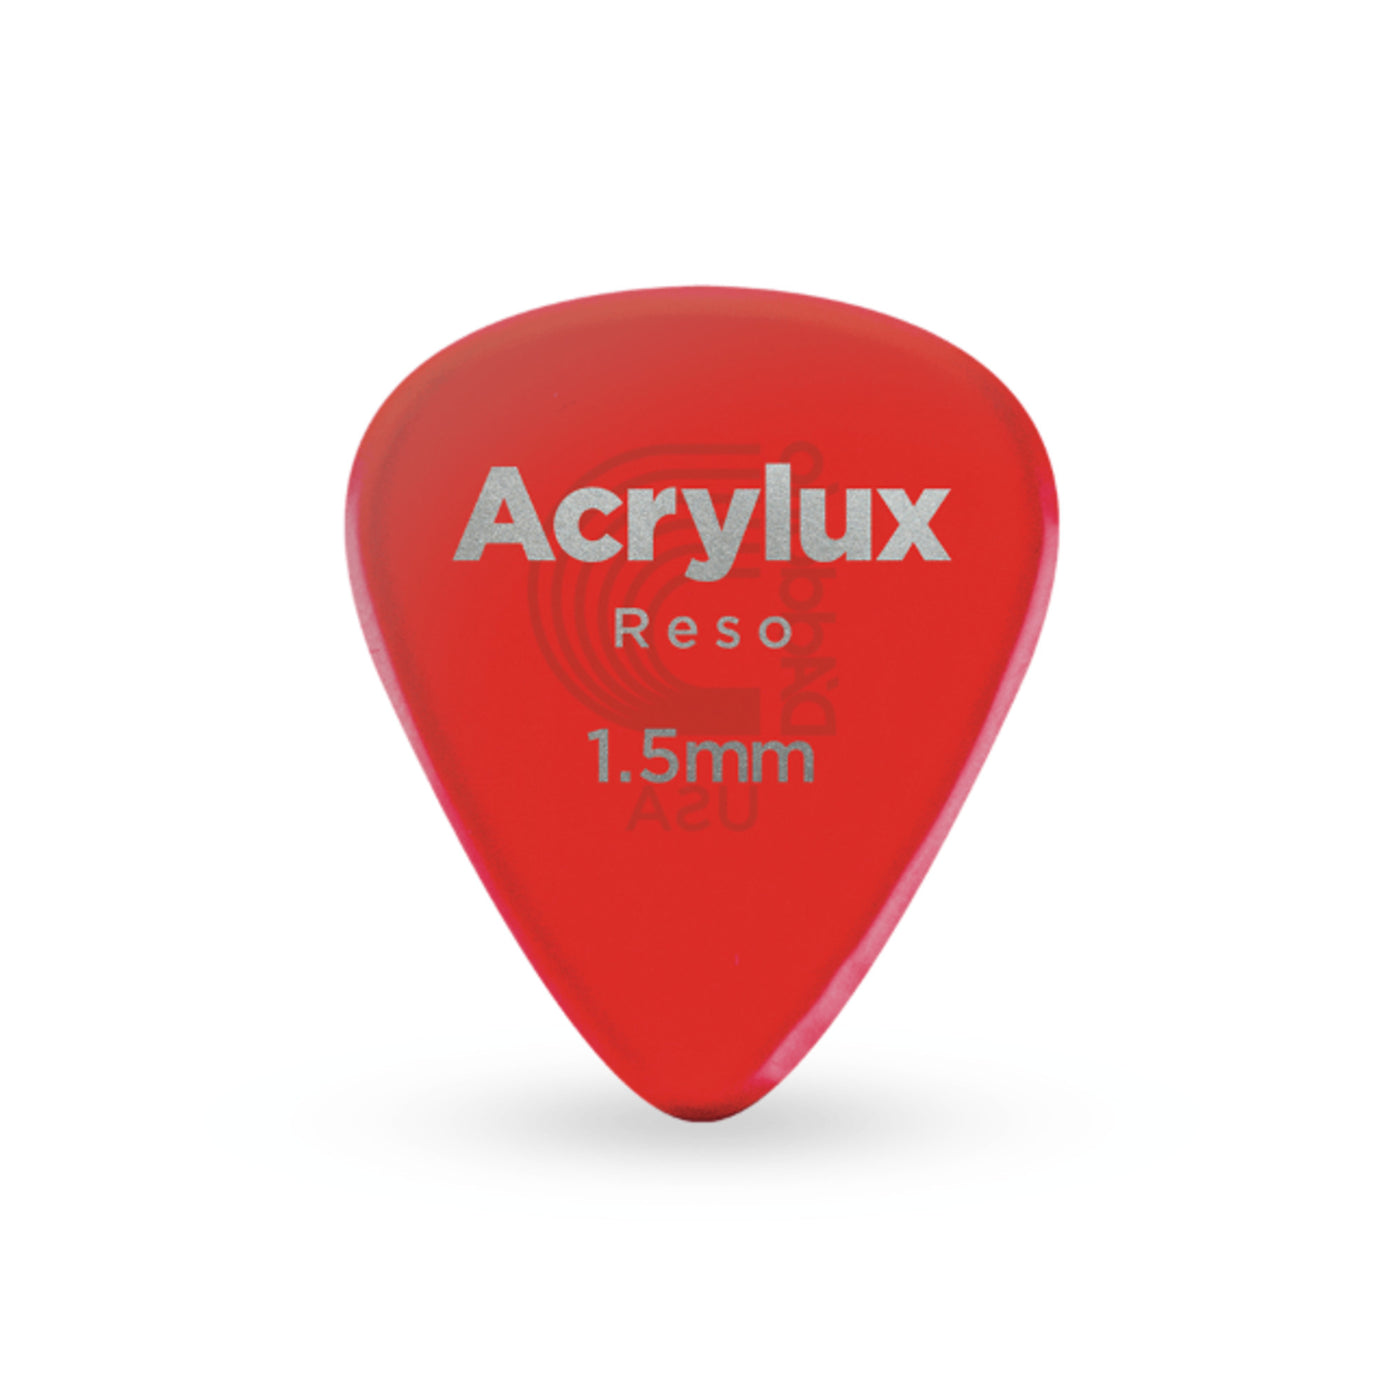 D'Addario Acrylux Reso Guitar Pick 1.5MM, Standard, 25-Pack (1AR7-25)